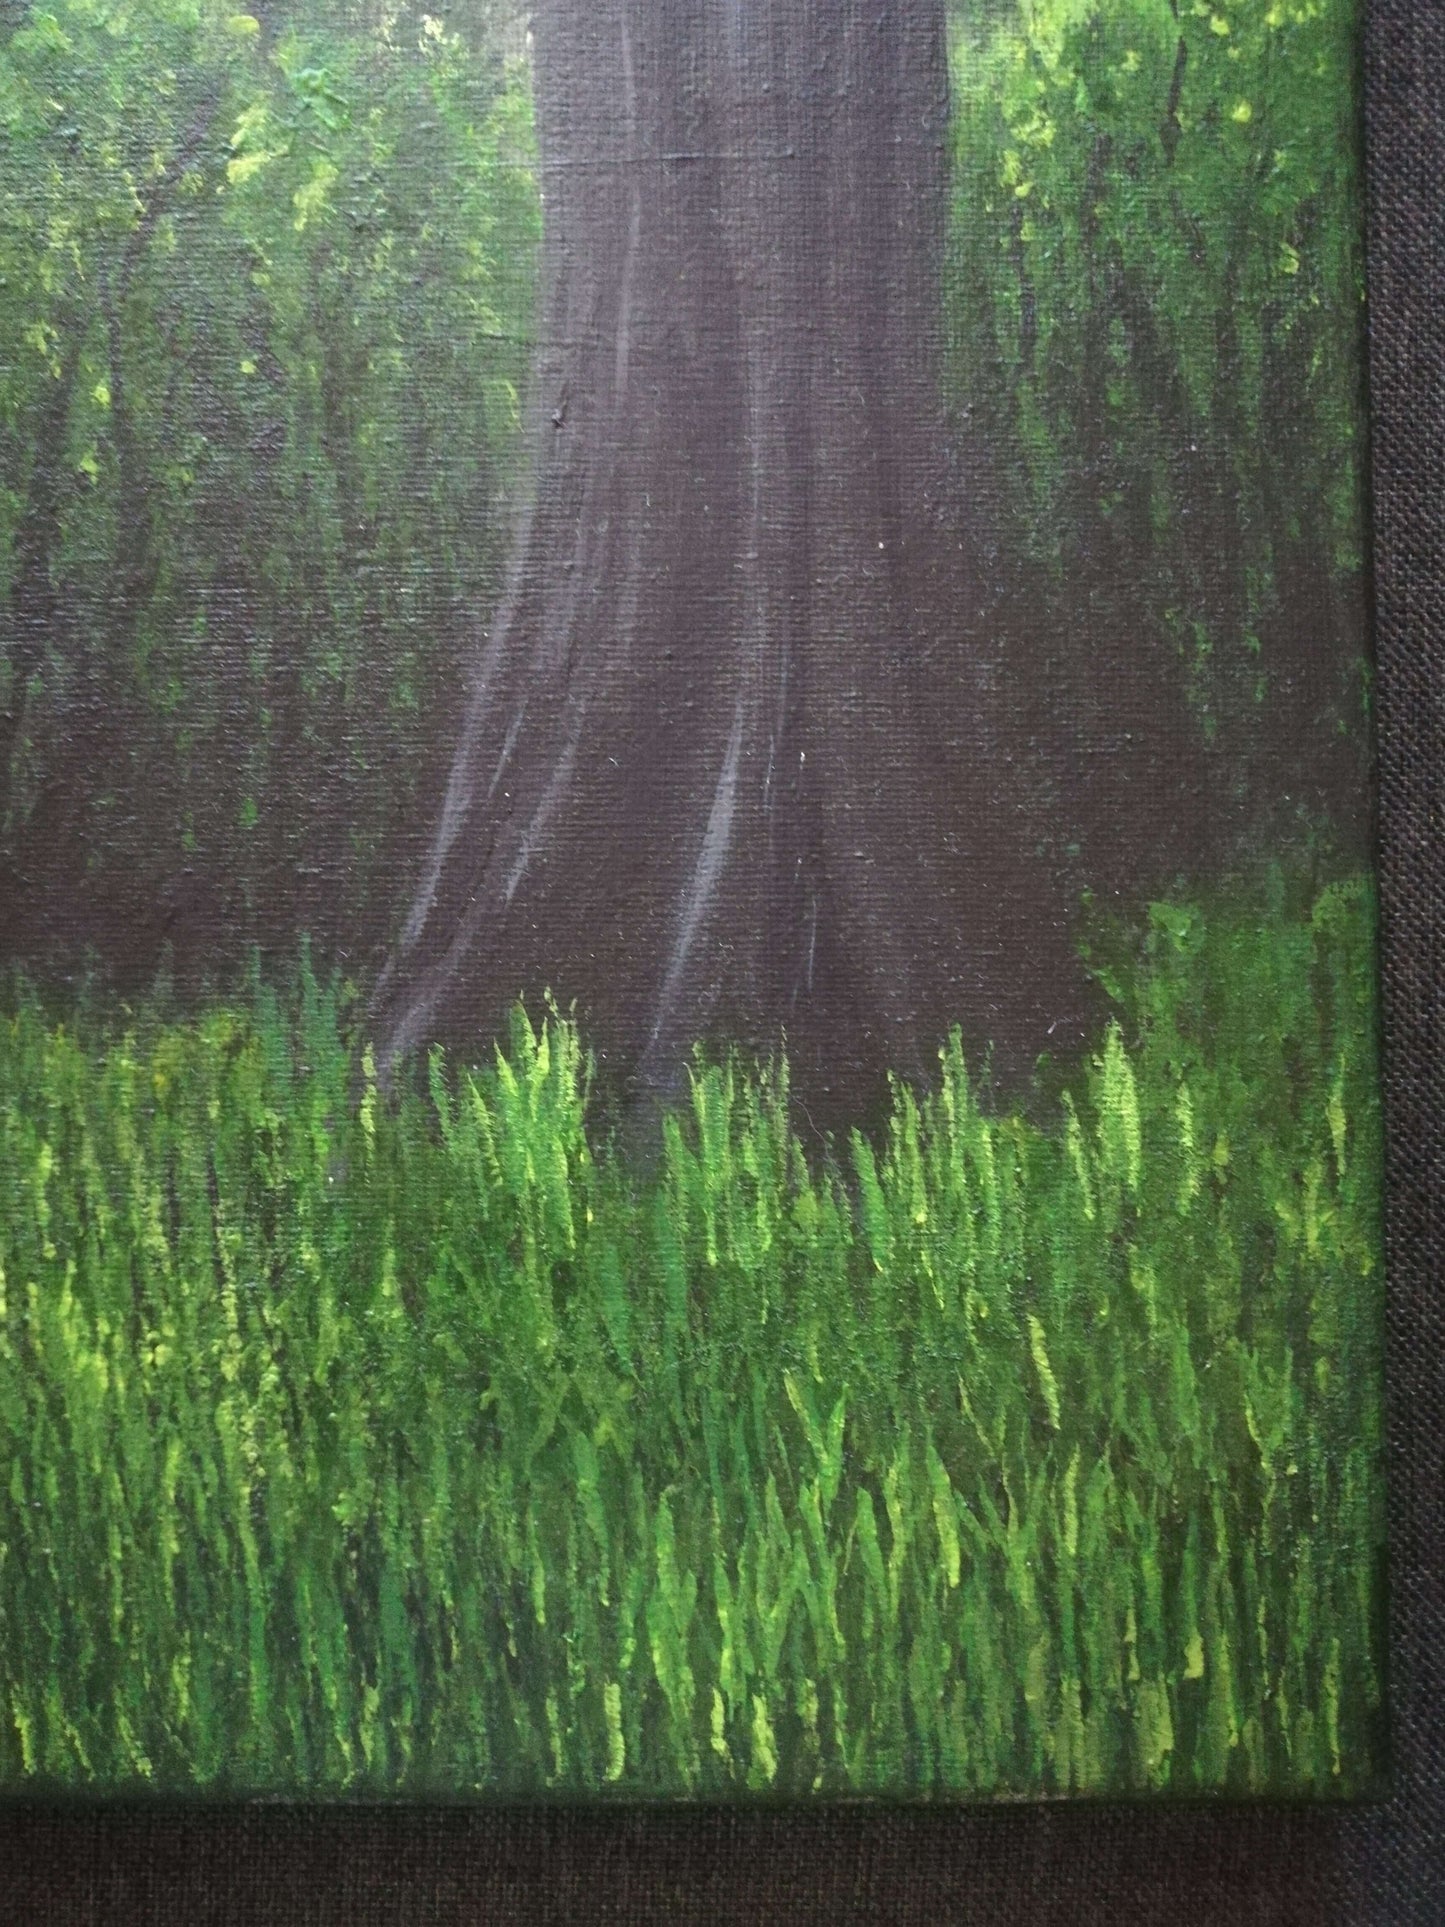 Into the Woods, ©Ian Garrett 2022. Acrylic on Canvas 20 x 16 inches.